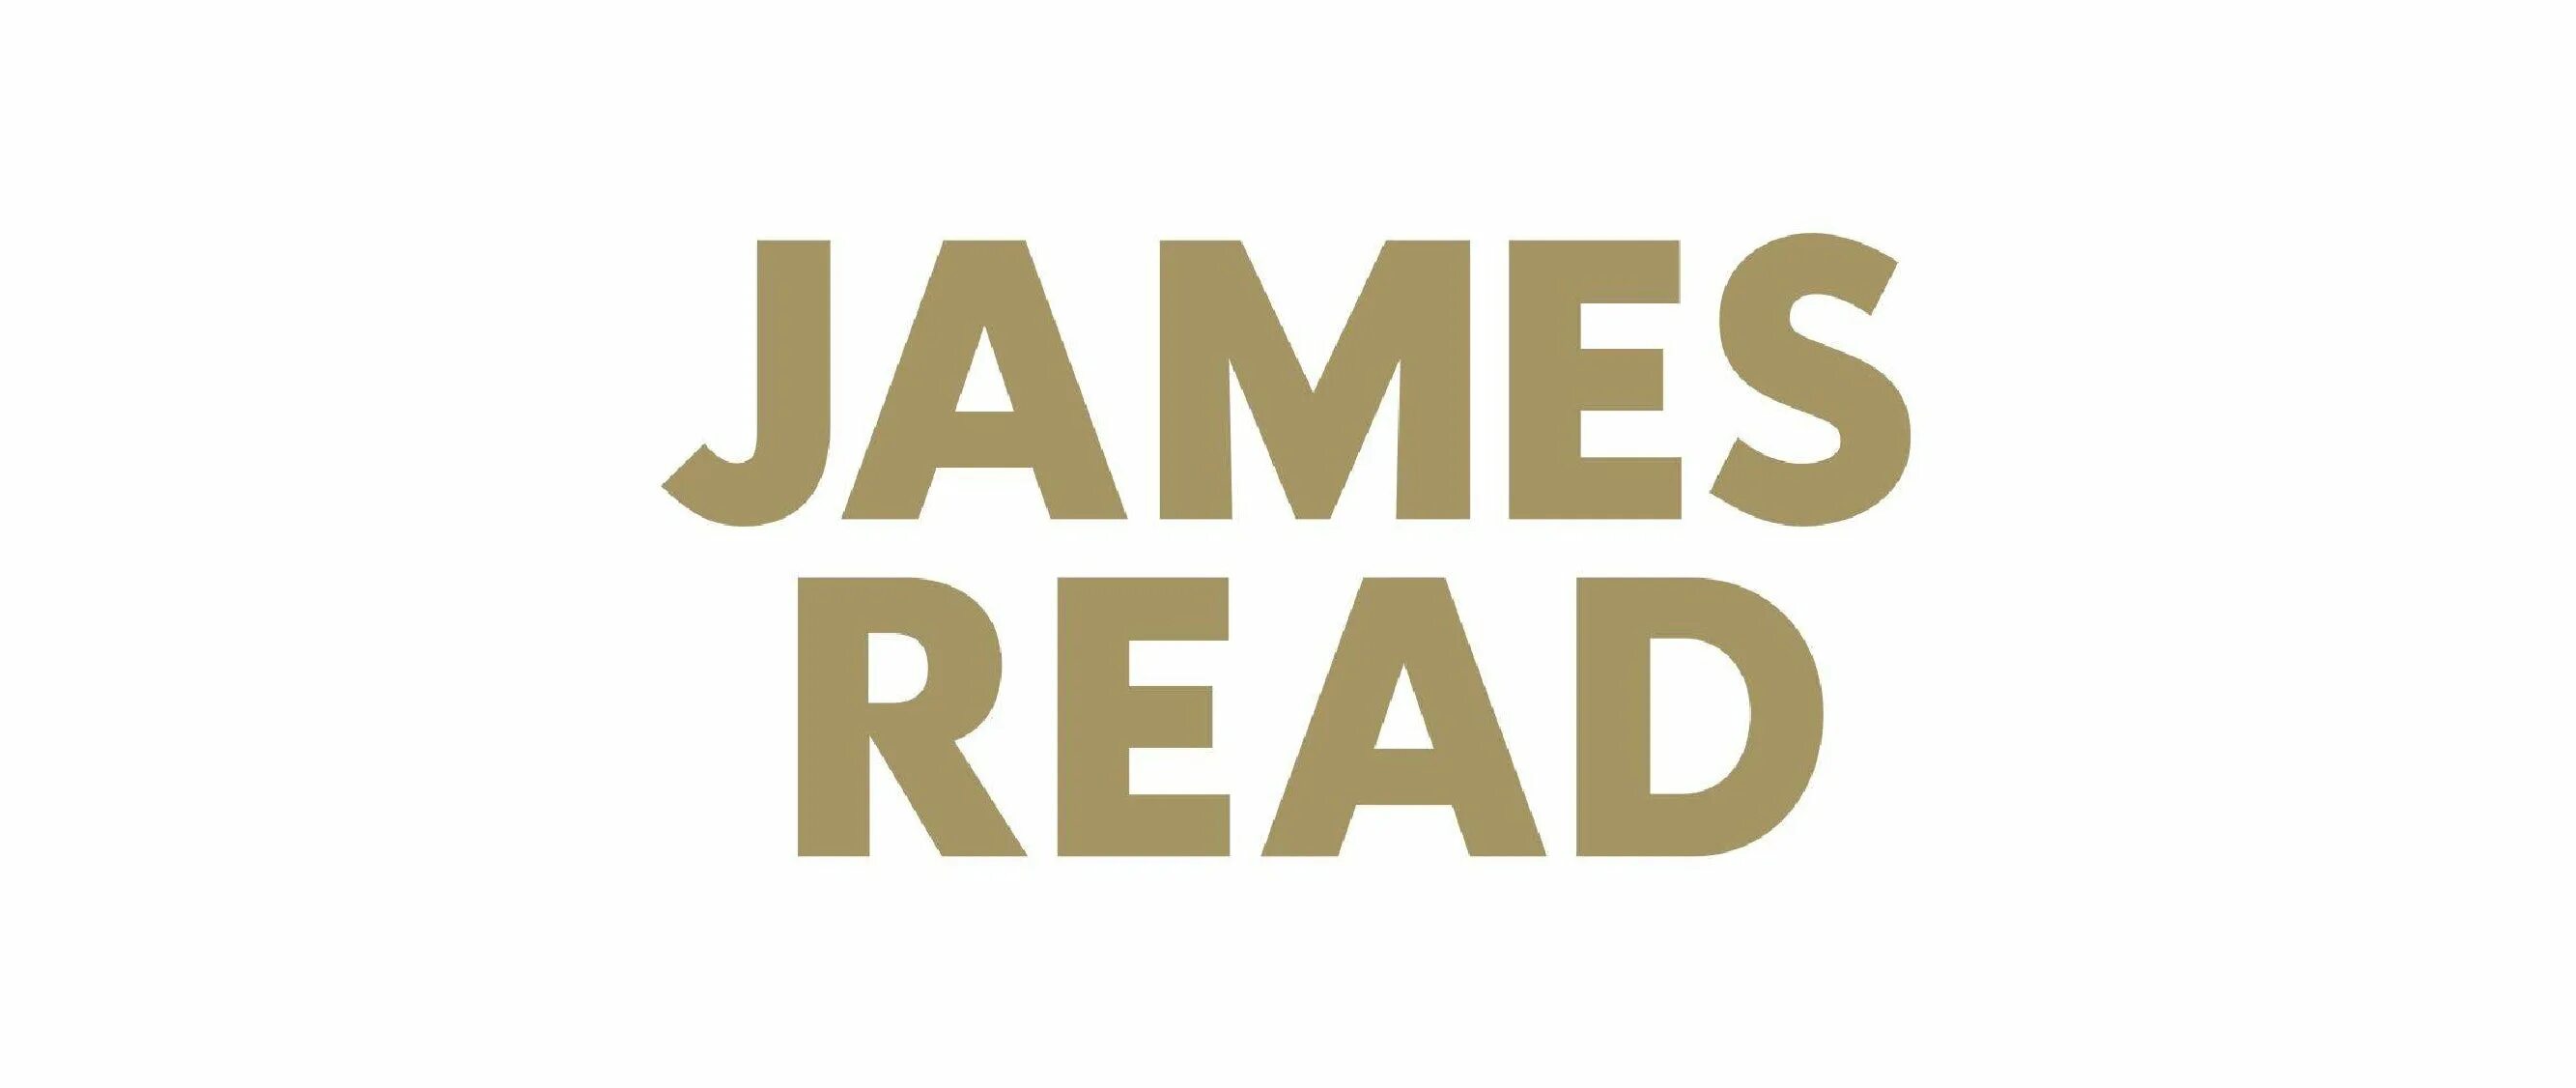 Read jim's. James read. Бренд James read.